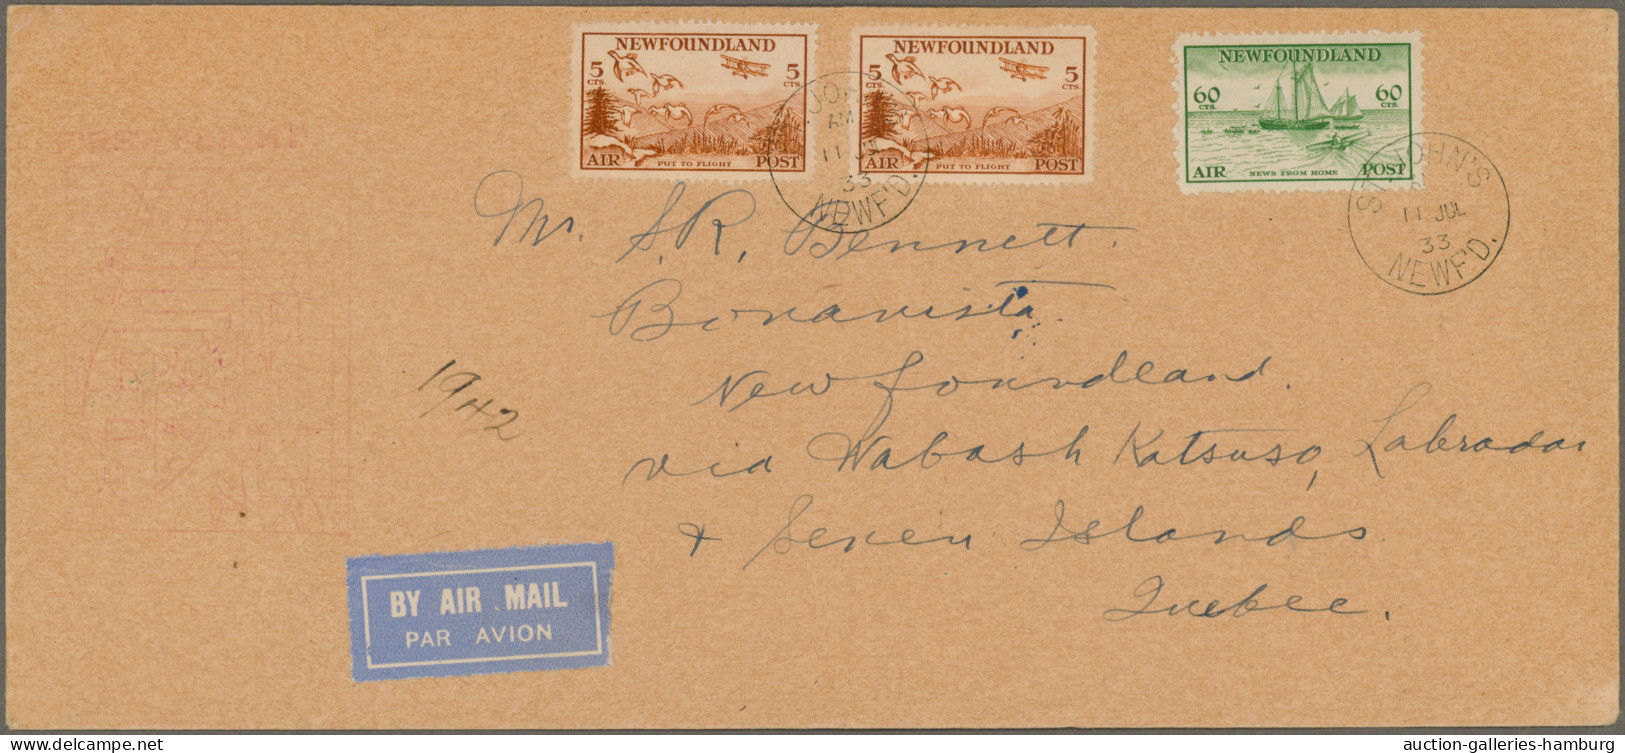 Newfoundland - Air Mail: 1933, 11 July, First Flight To Wabush-Katsao/Labrador V - Fin De Catalogue (Back Of Book)